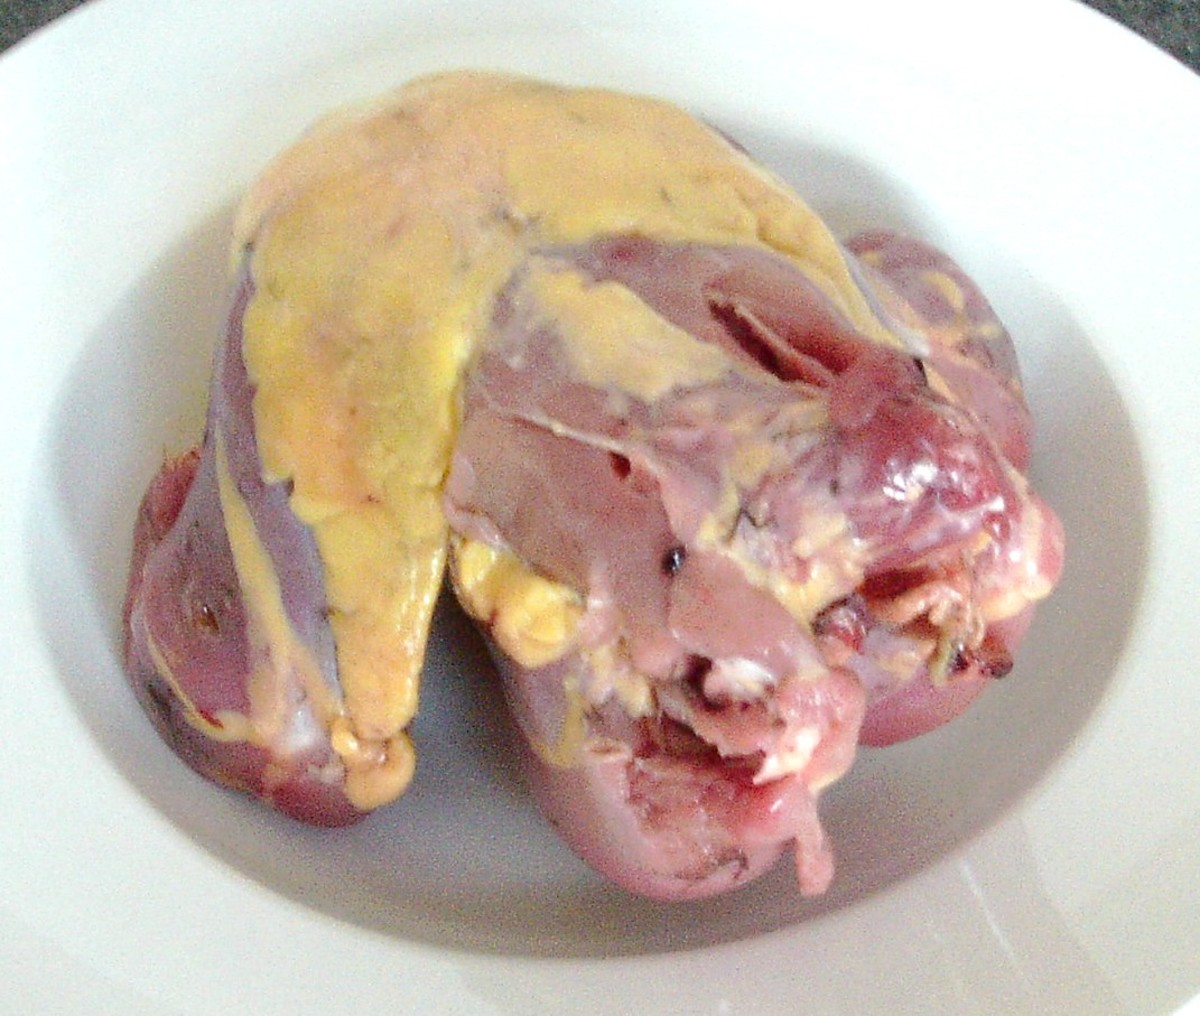 Hung and skinned pheasant